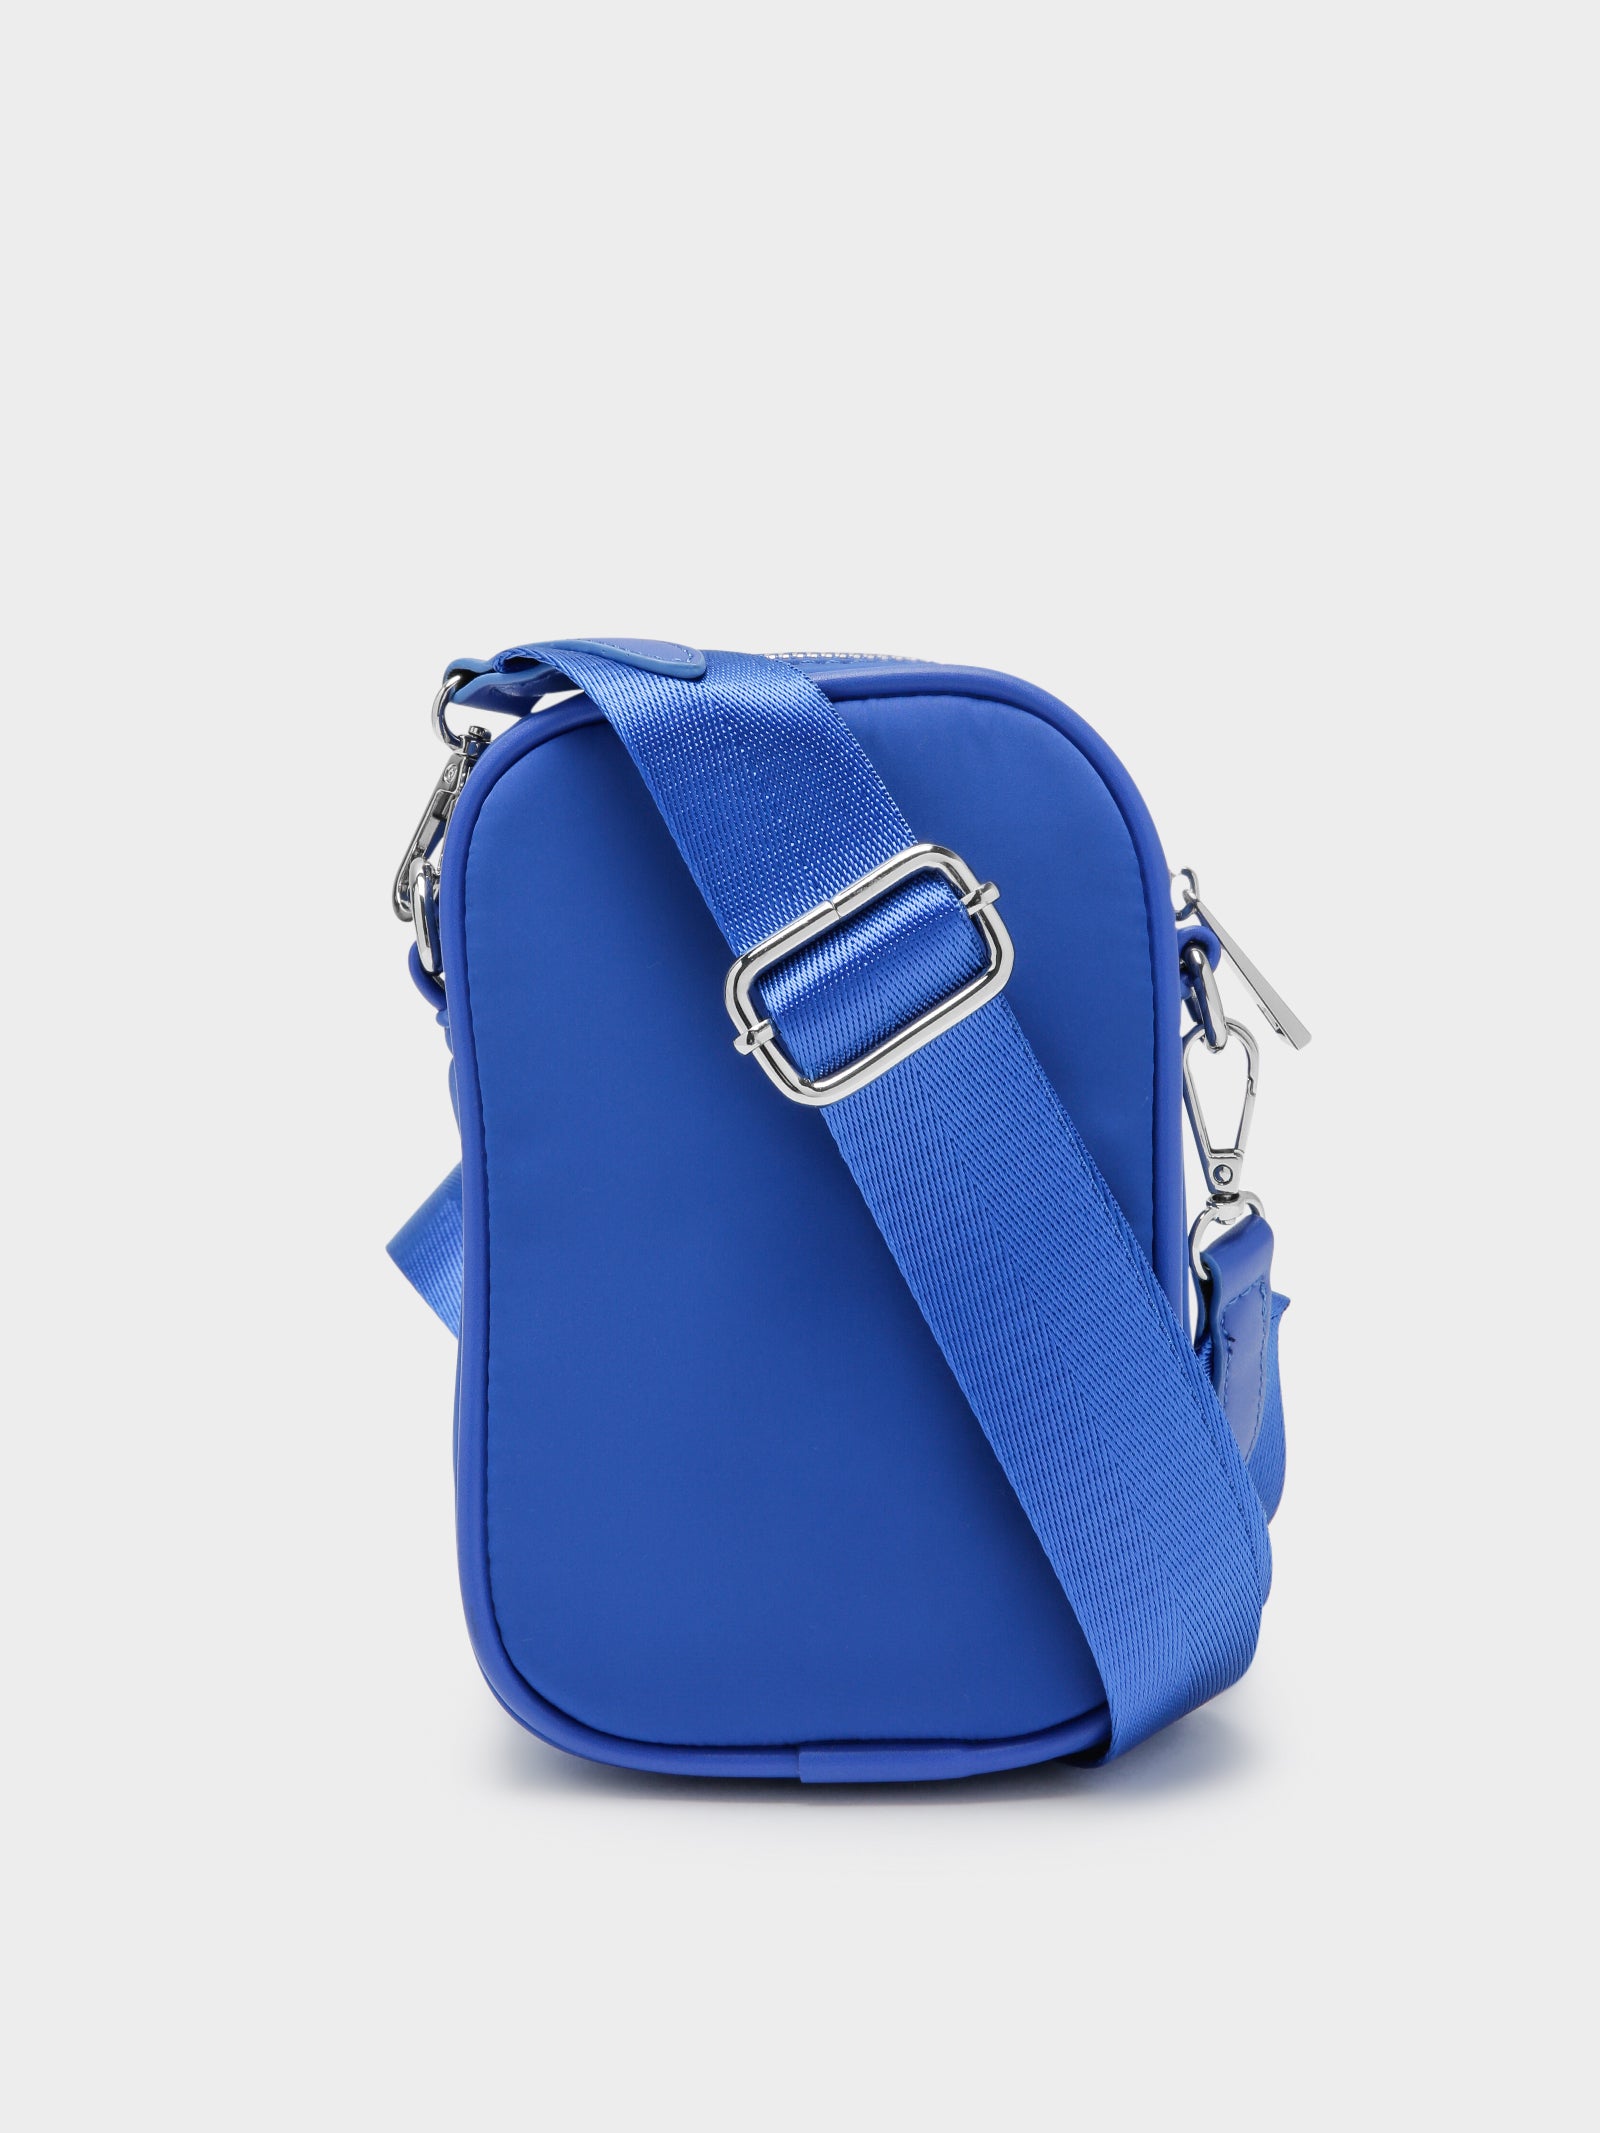 Dooney & Bourke Patent Leather Pouchette Crossbody Bag - Royal Blue |  eBay